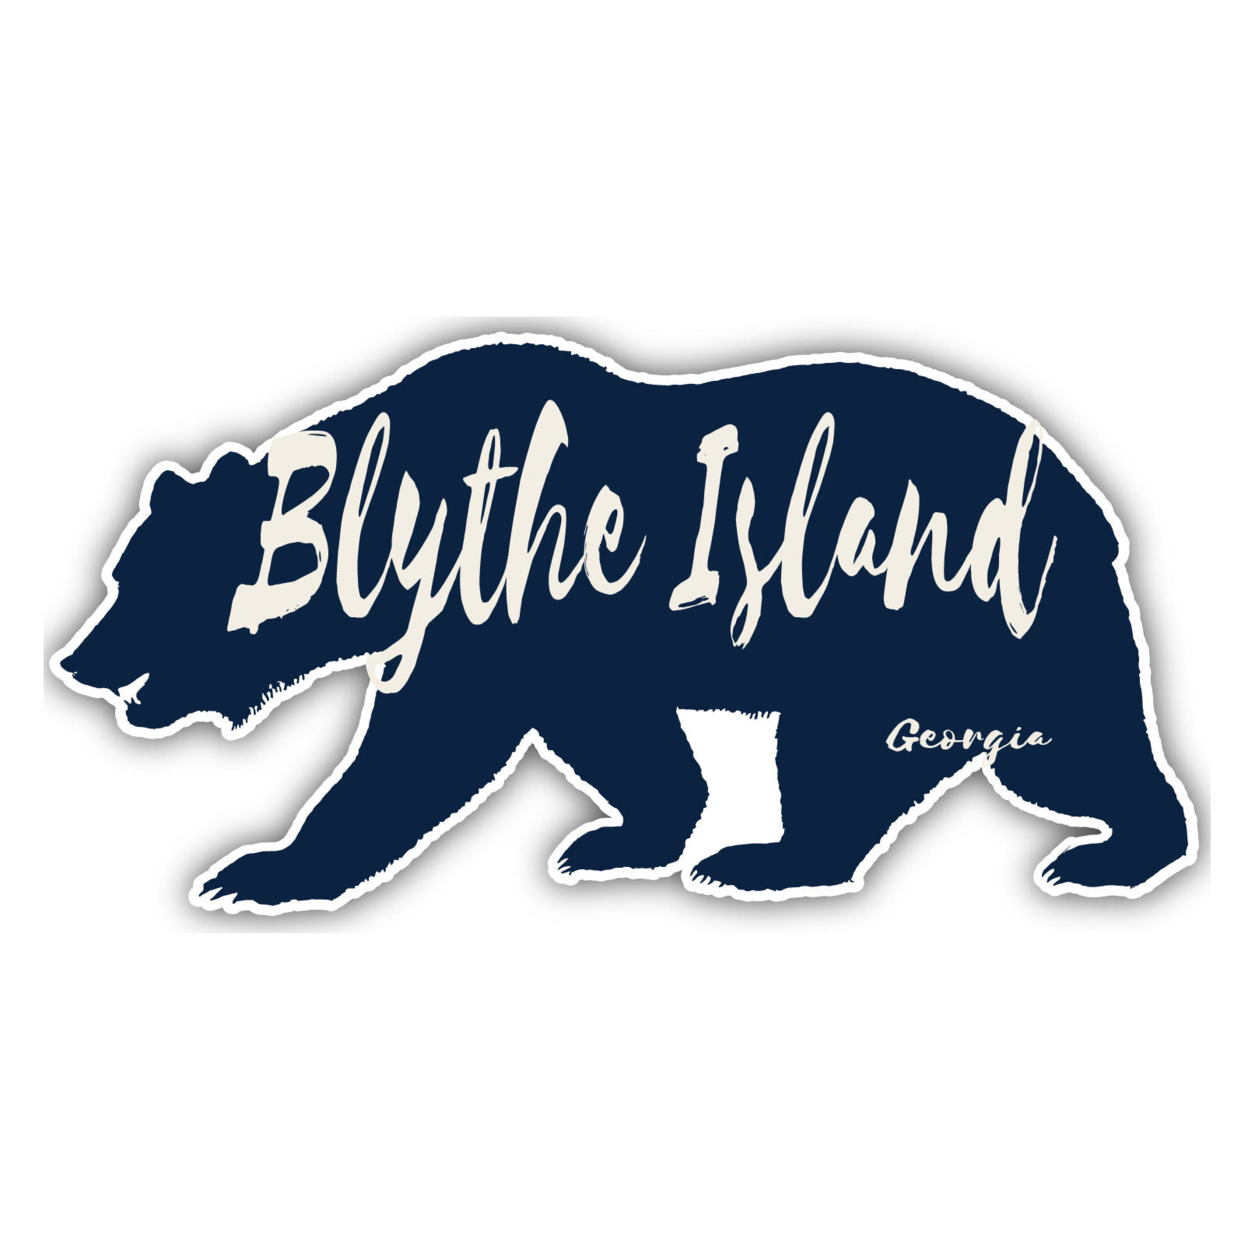 Blythe Island Georgia Souvenir Decorative Stickers (Choose Theme And Size) - 4-Pack, 2-Inch, Camp Life